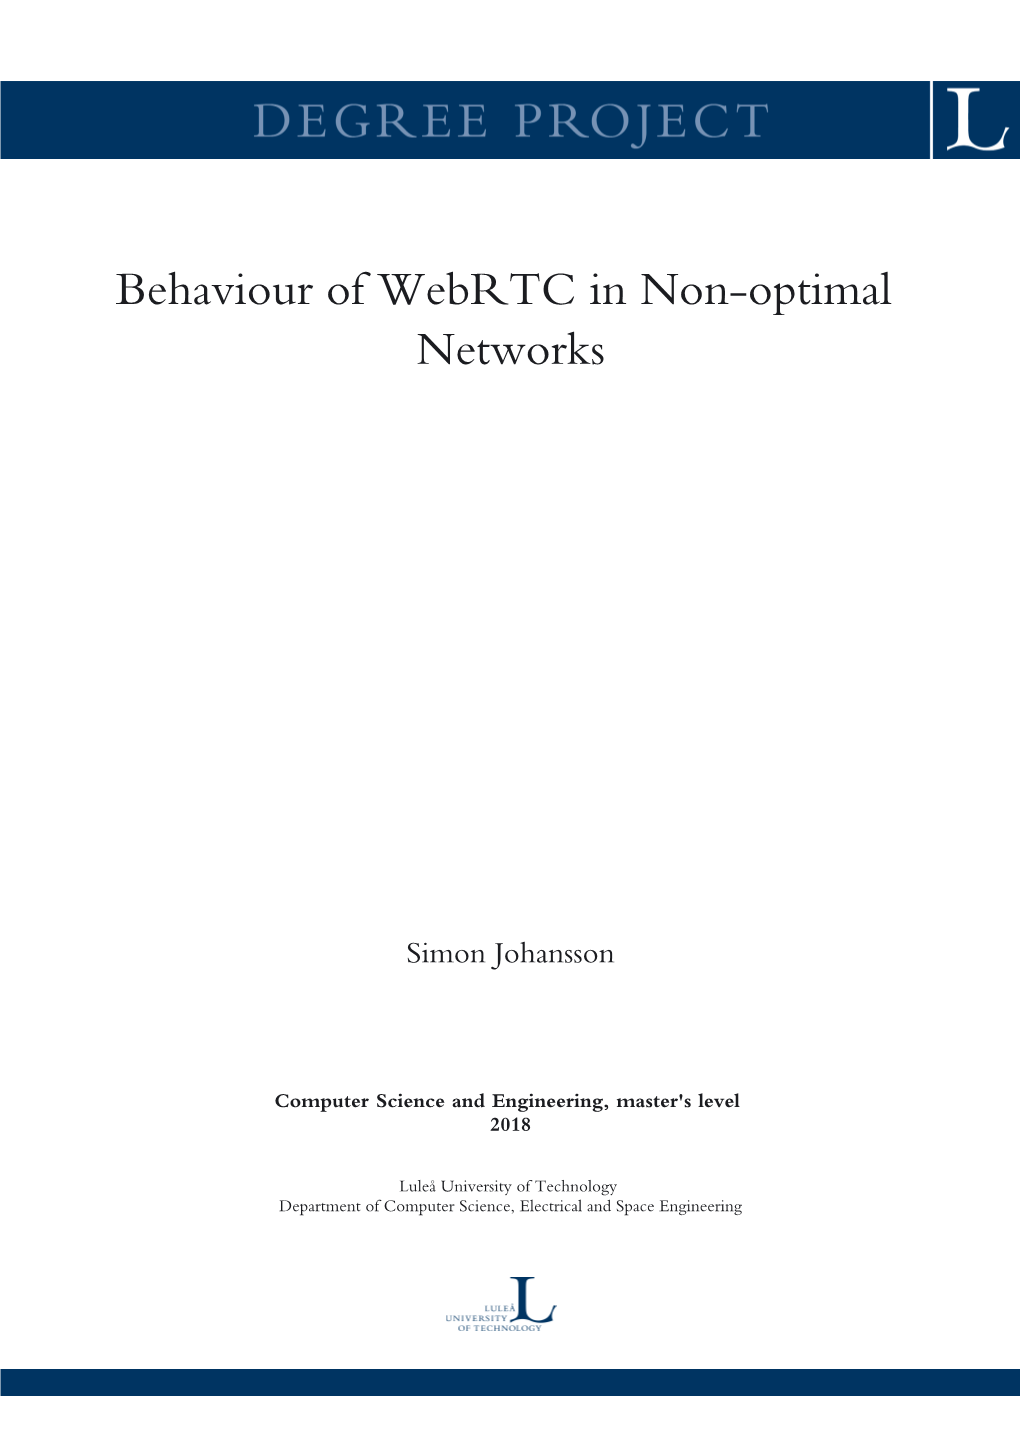 Behaviour of Webrtc in Non-Optimal Networks